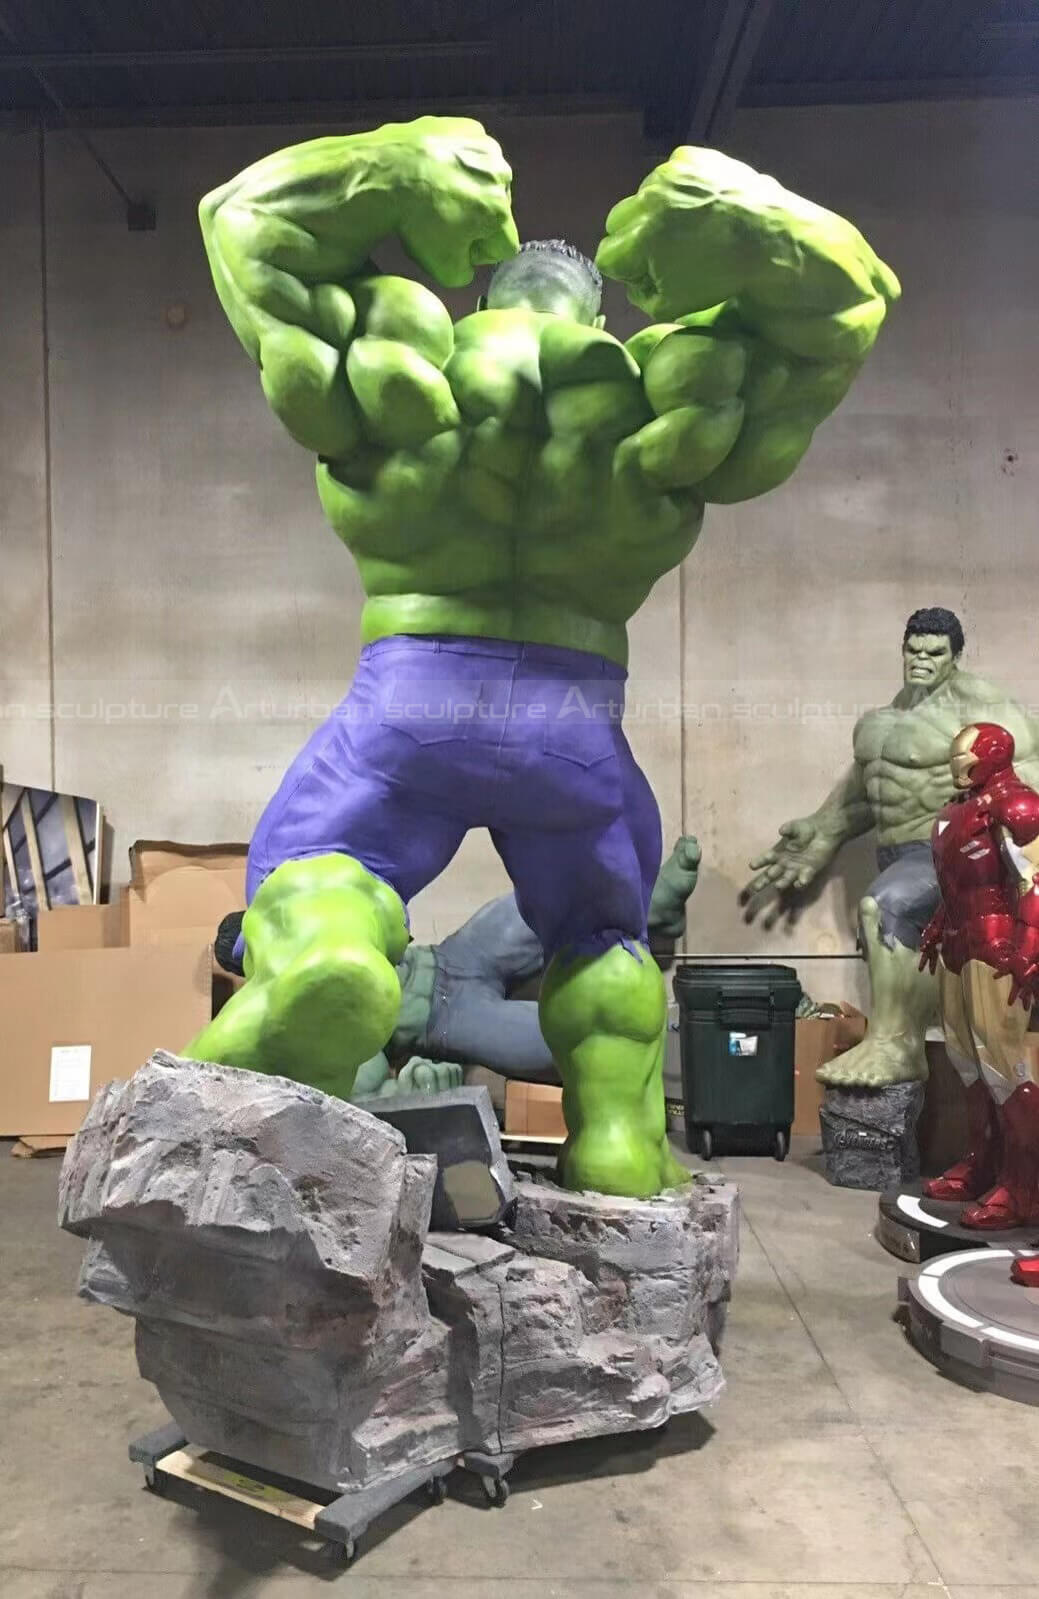 life size hulk action figure